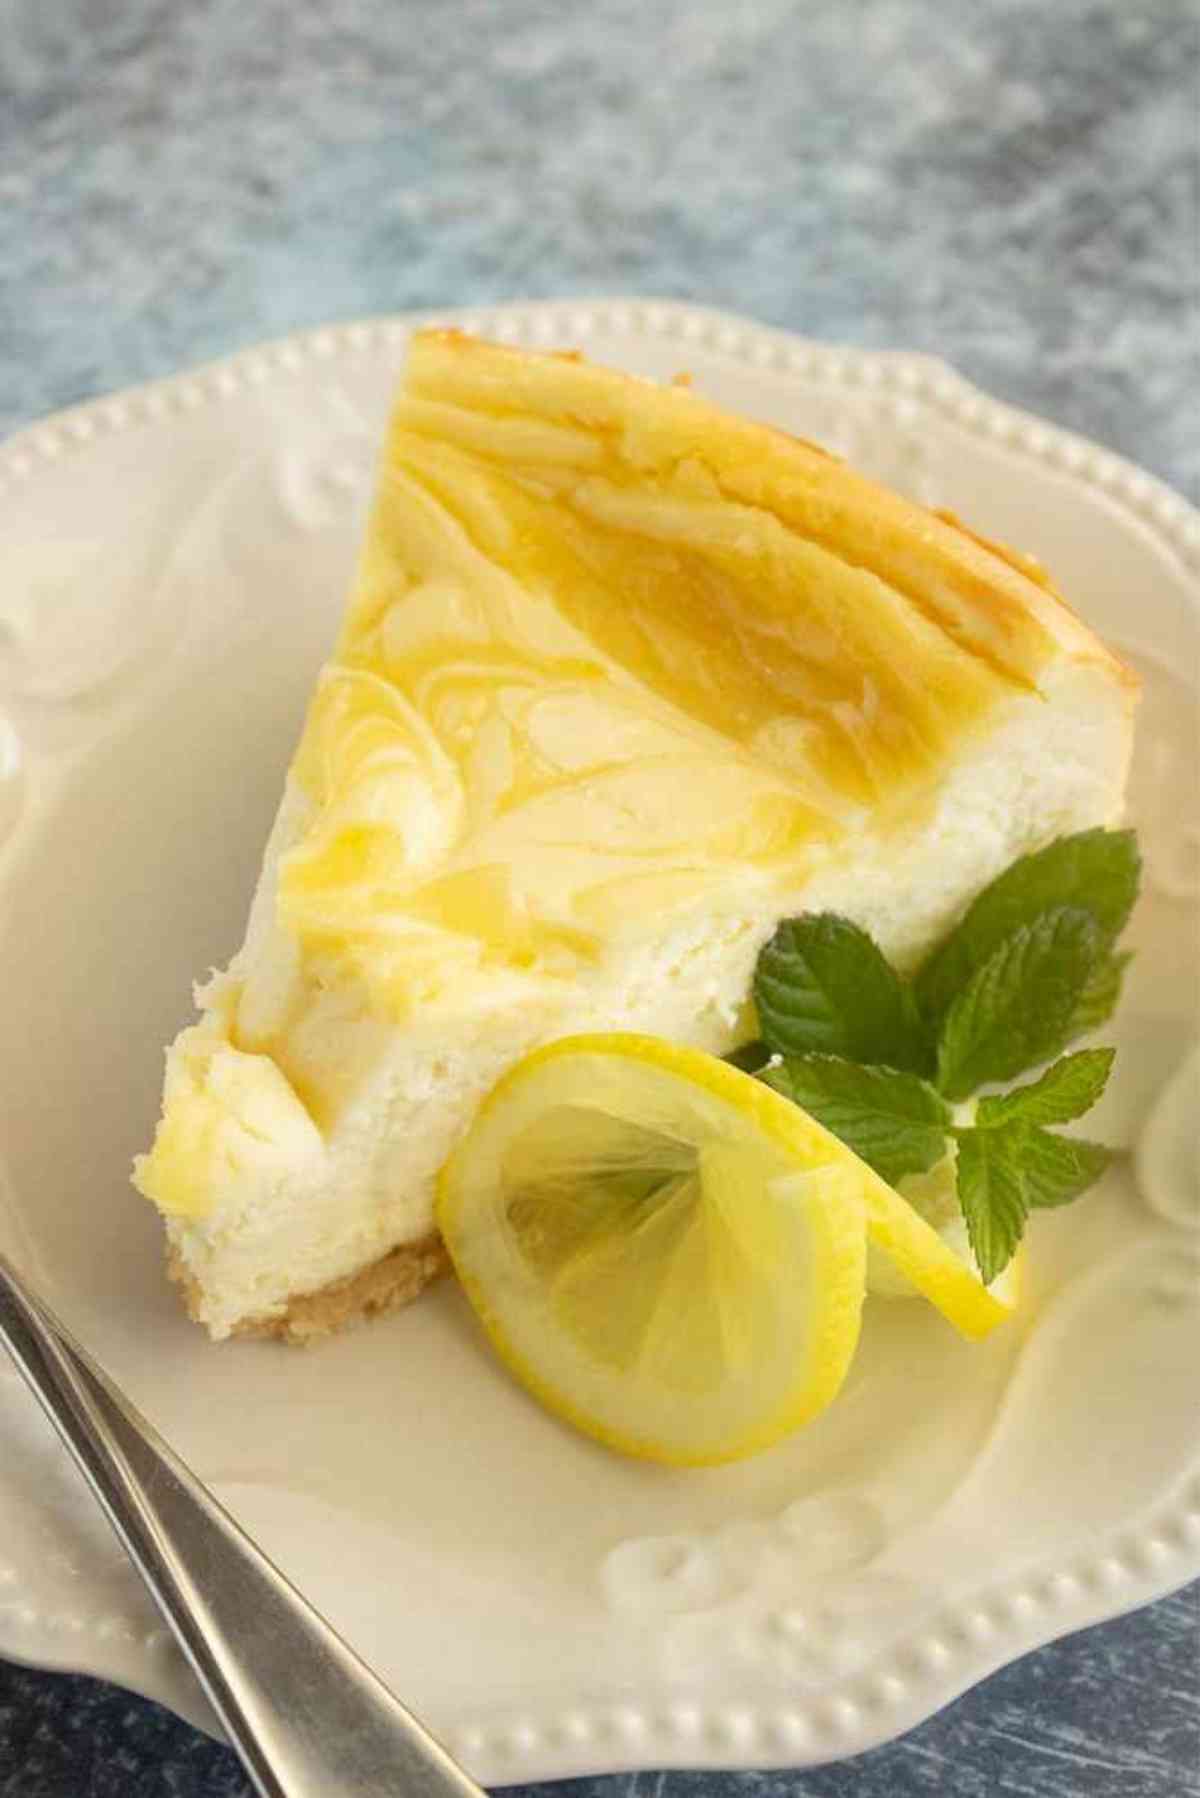 Slice of lemon swirl cheesecake garnished with lemon slice and mint.